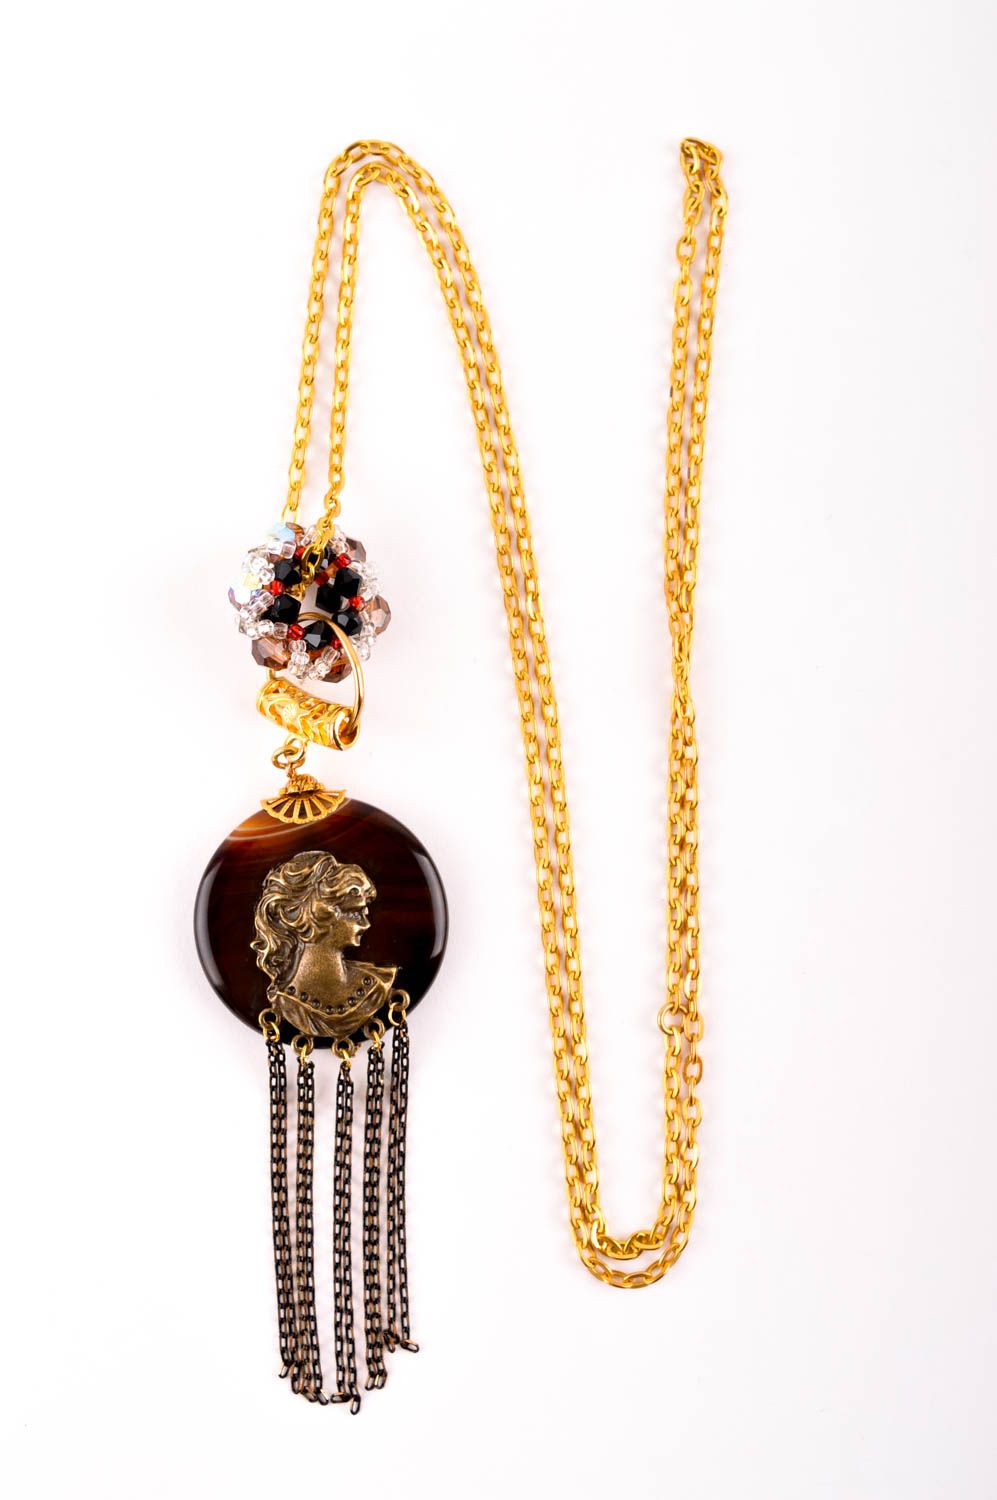 Handmade pendant designer accessory unusual gift ideas beads pendant for her photo 2